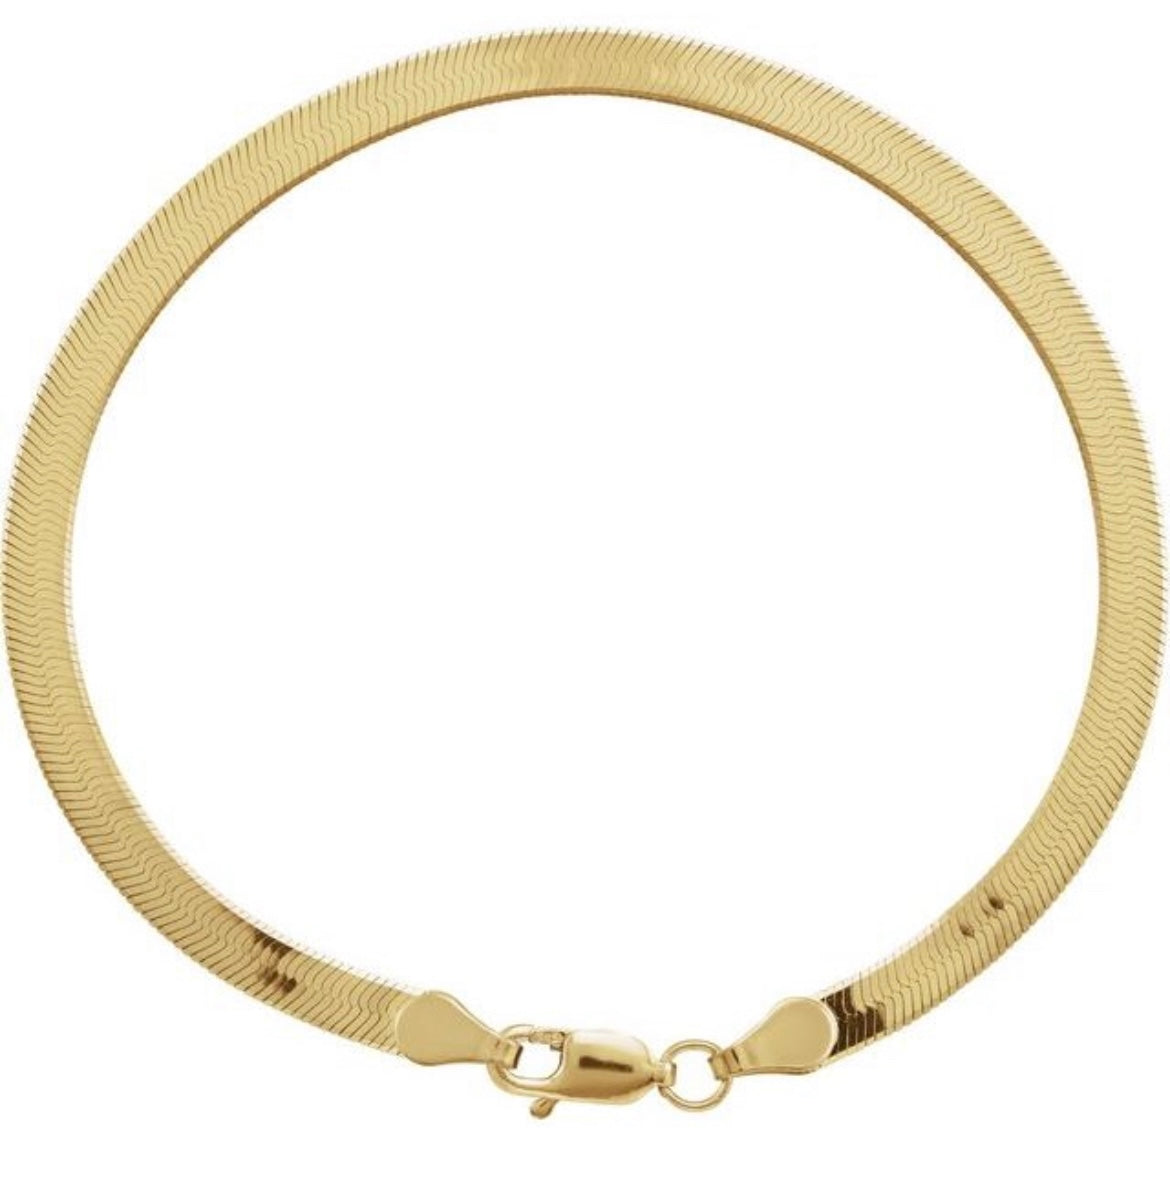 10kt Yellow Gold Herringbone bracelet